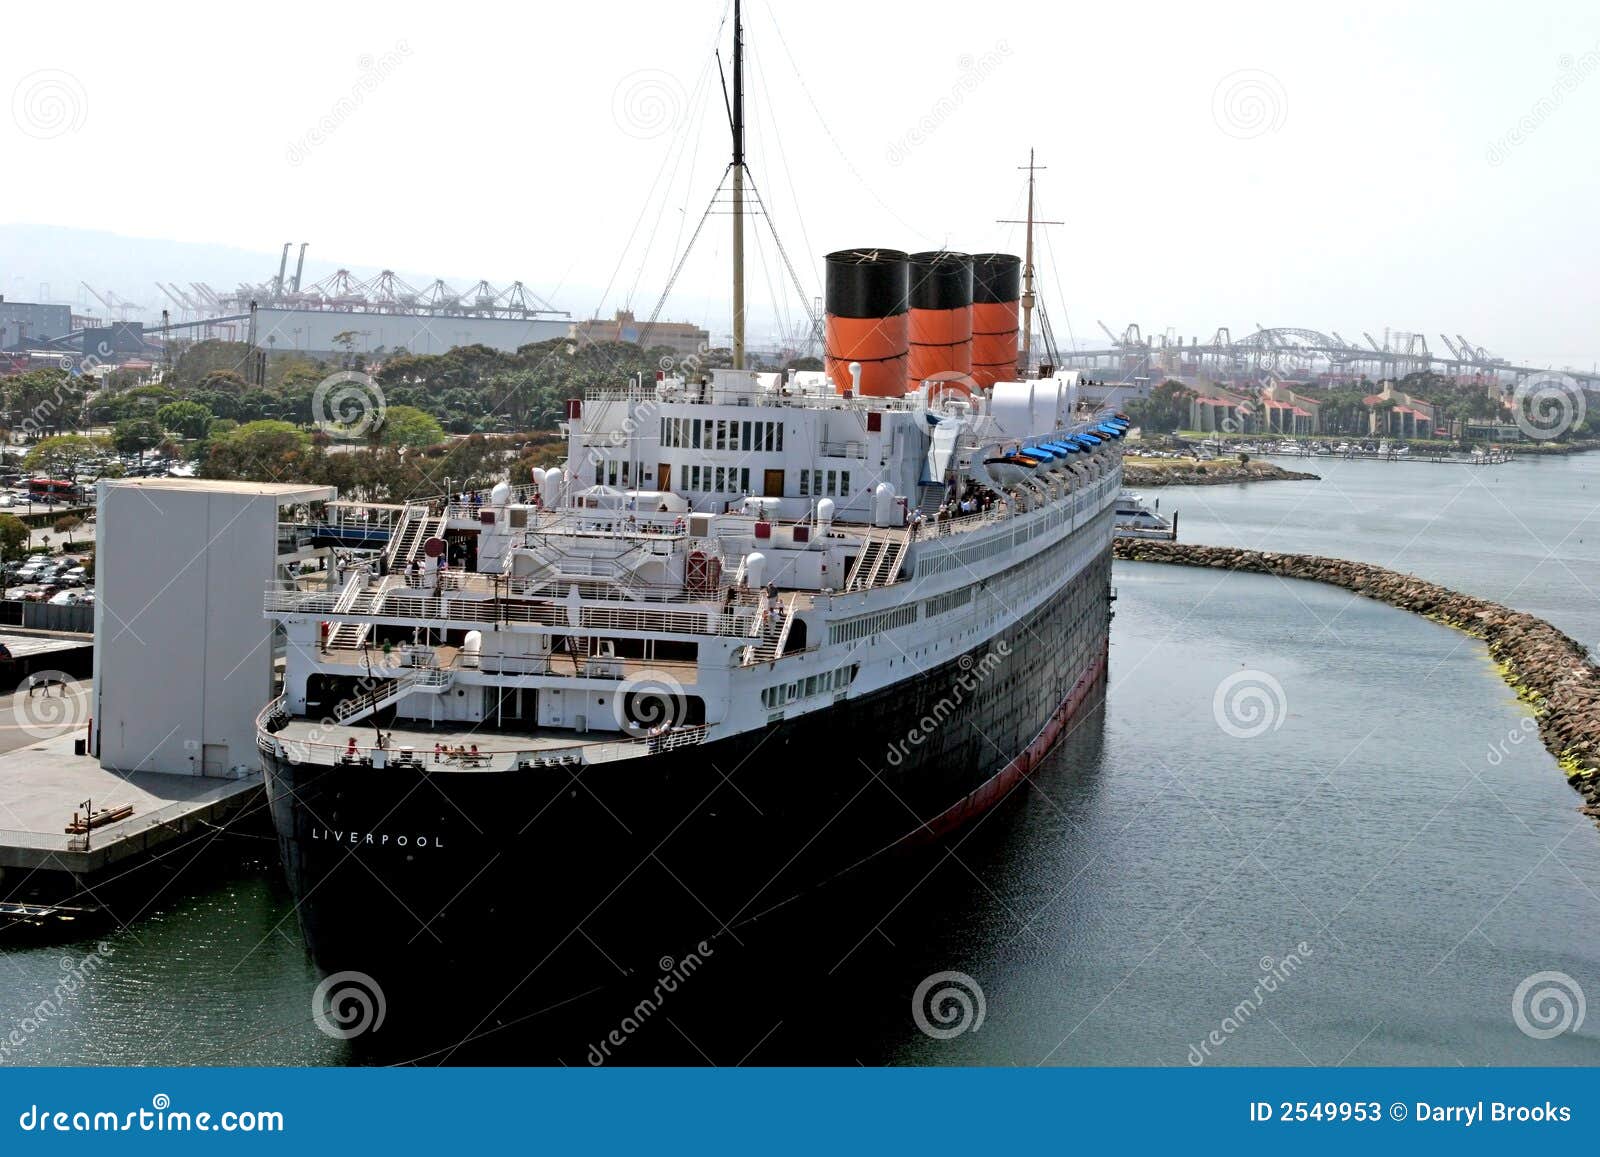 Classic Cruise Ship Stock Photos - Image: 2549953